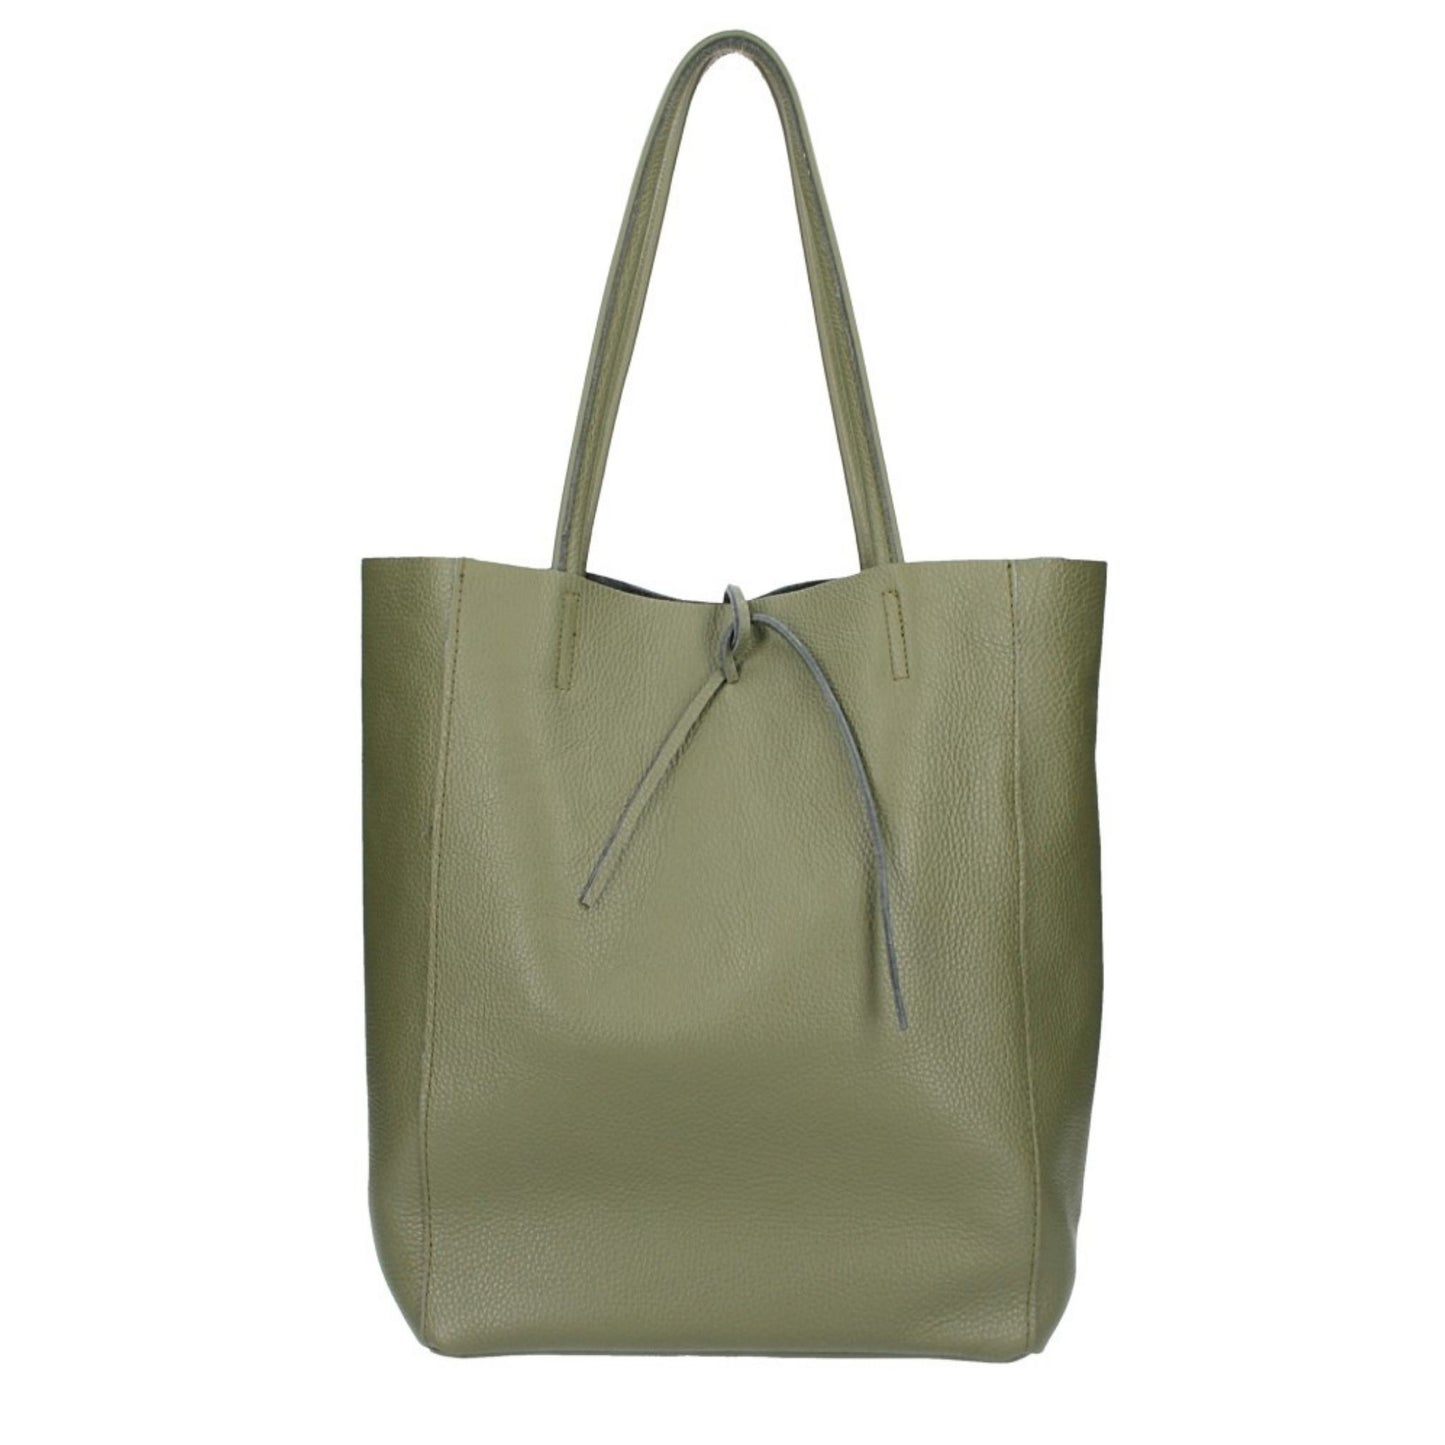 Green leather shopper bag